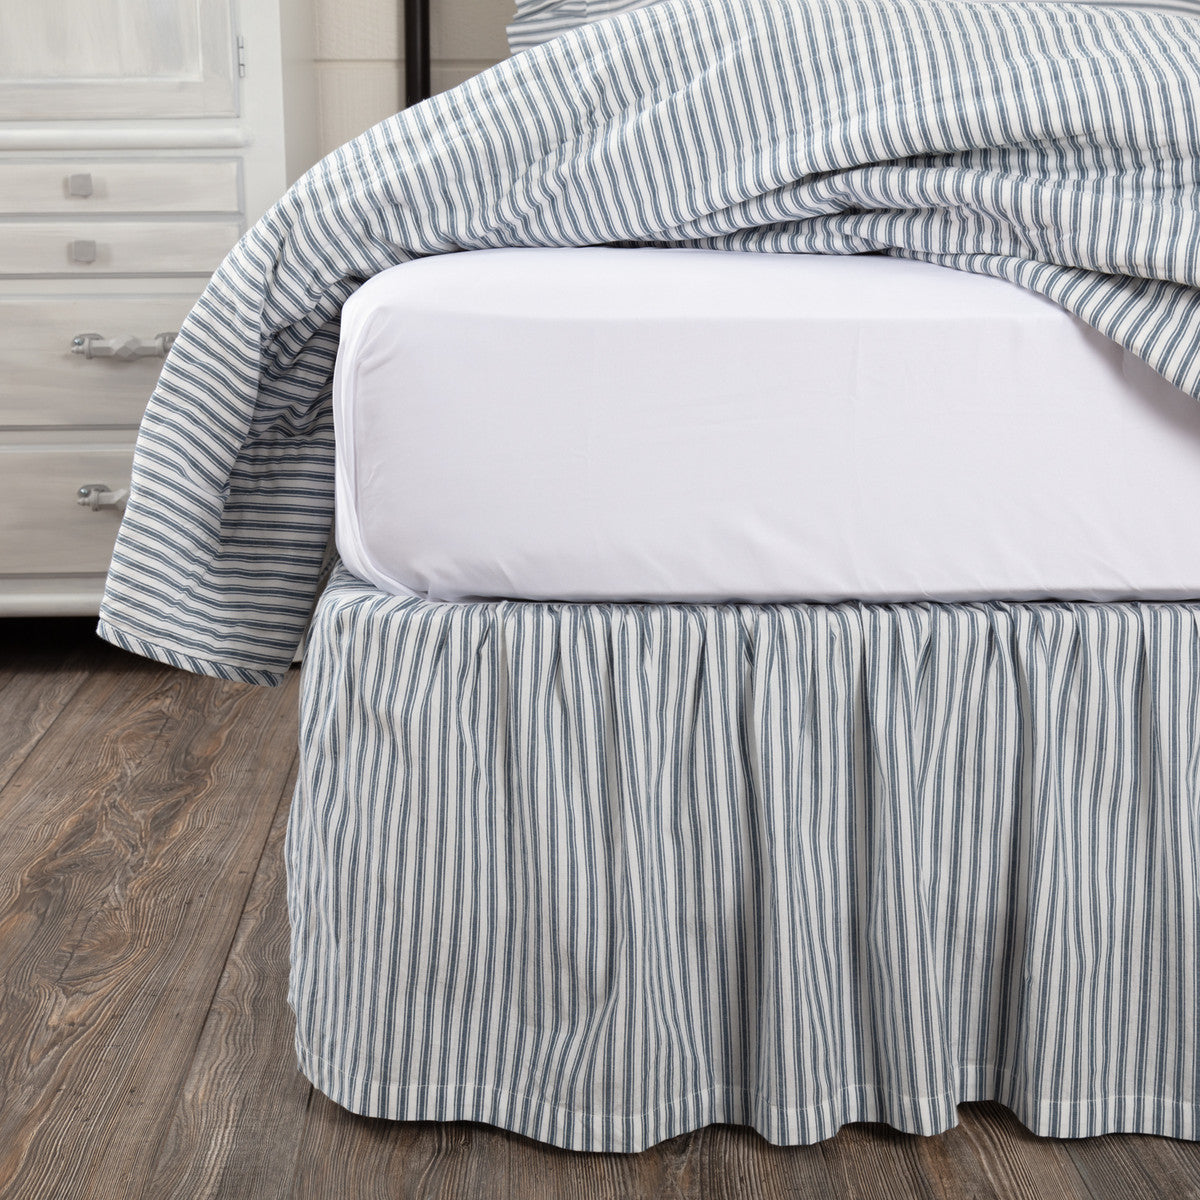 Sawyer Mill Blue Ticking Stripe Queen Bed Skirt 60x80x16